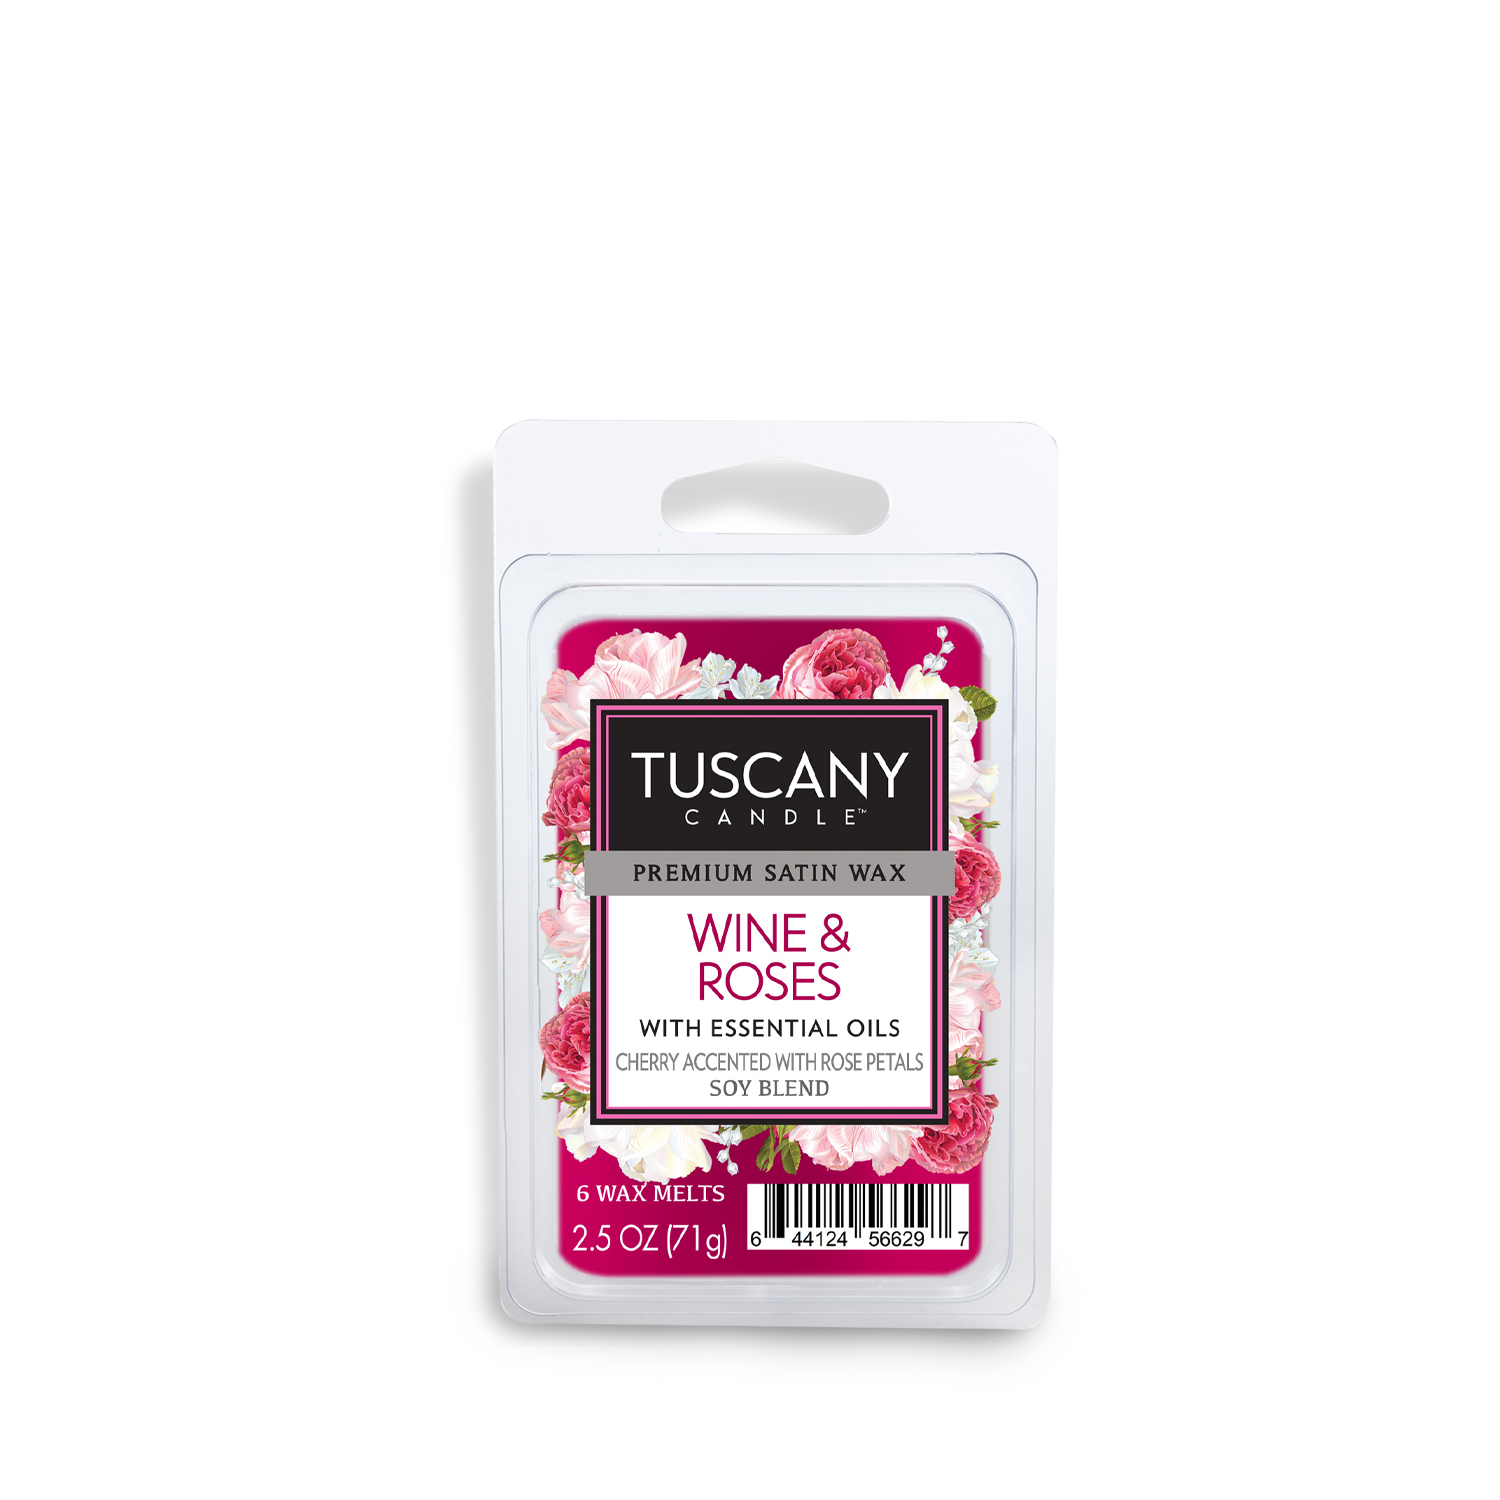 Tuscany Candle® EVD Wine & Roses Scented Wax Melt (2.5 oz) bars.